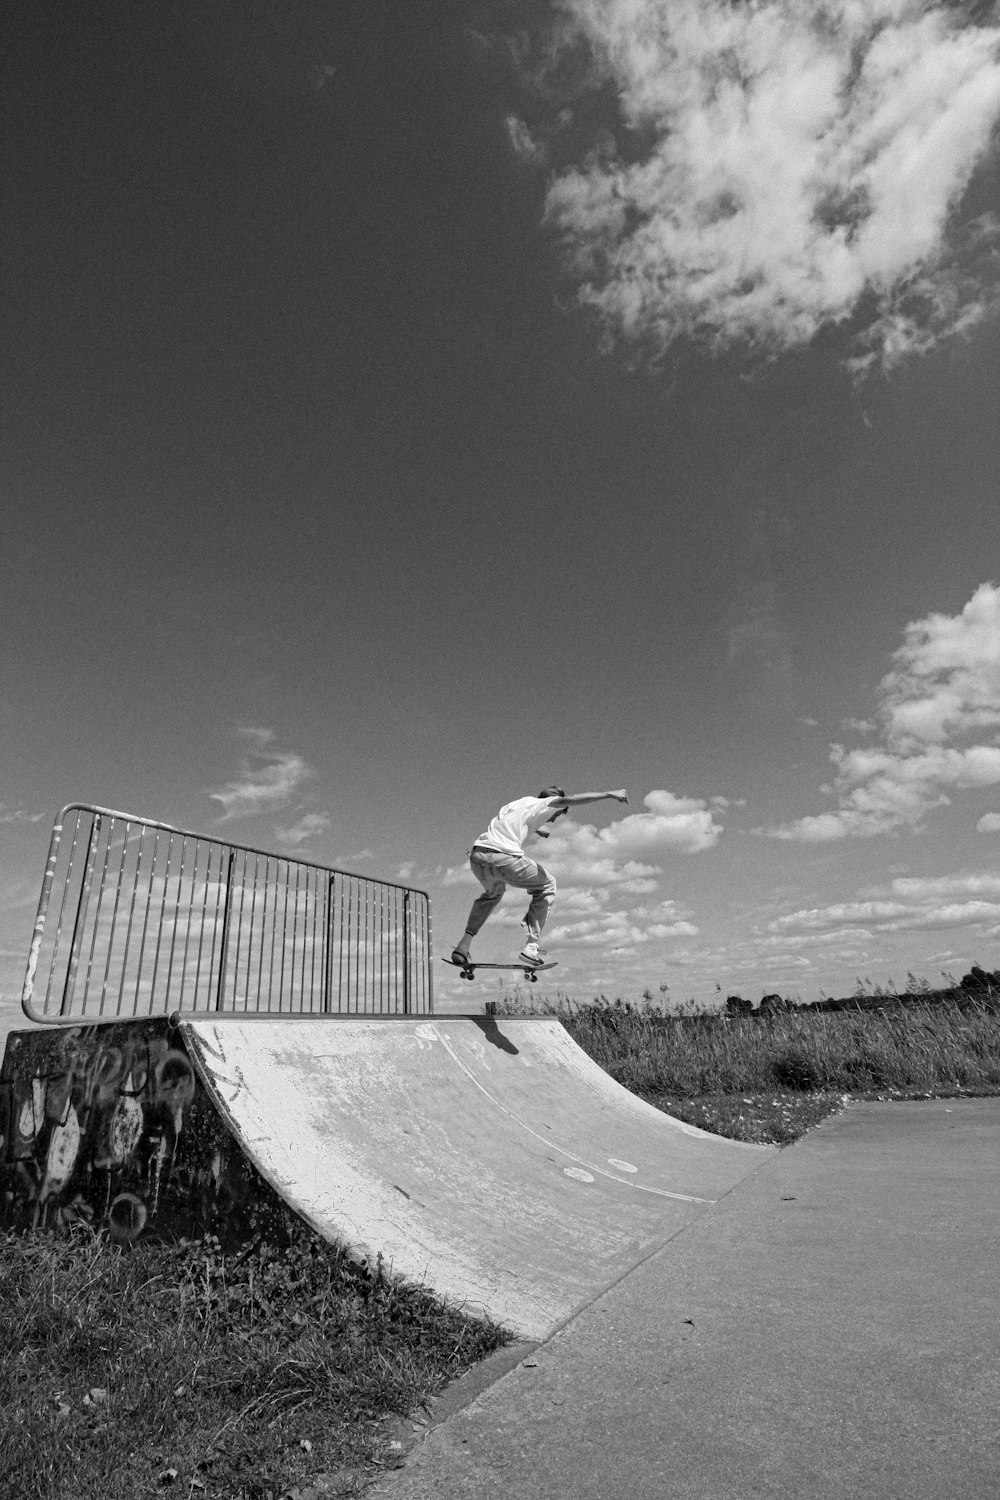 grayscale photo of man riding skateboard